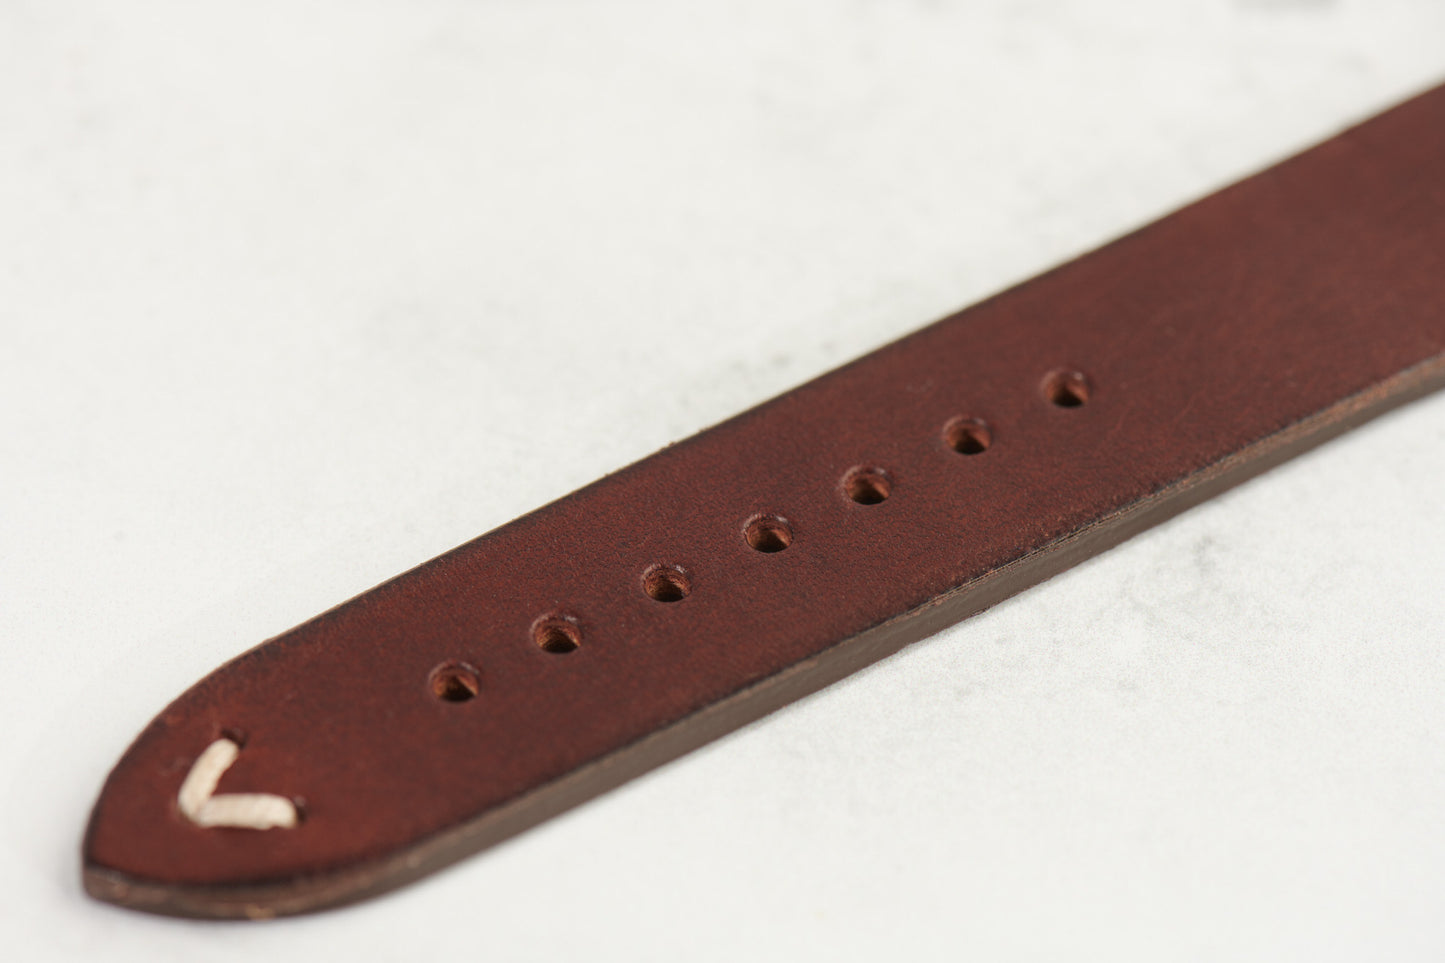 Italian leather watch strap details